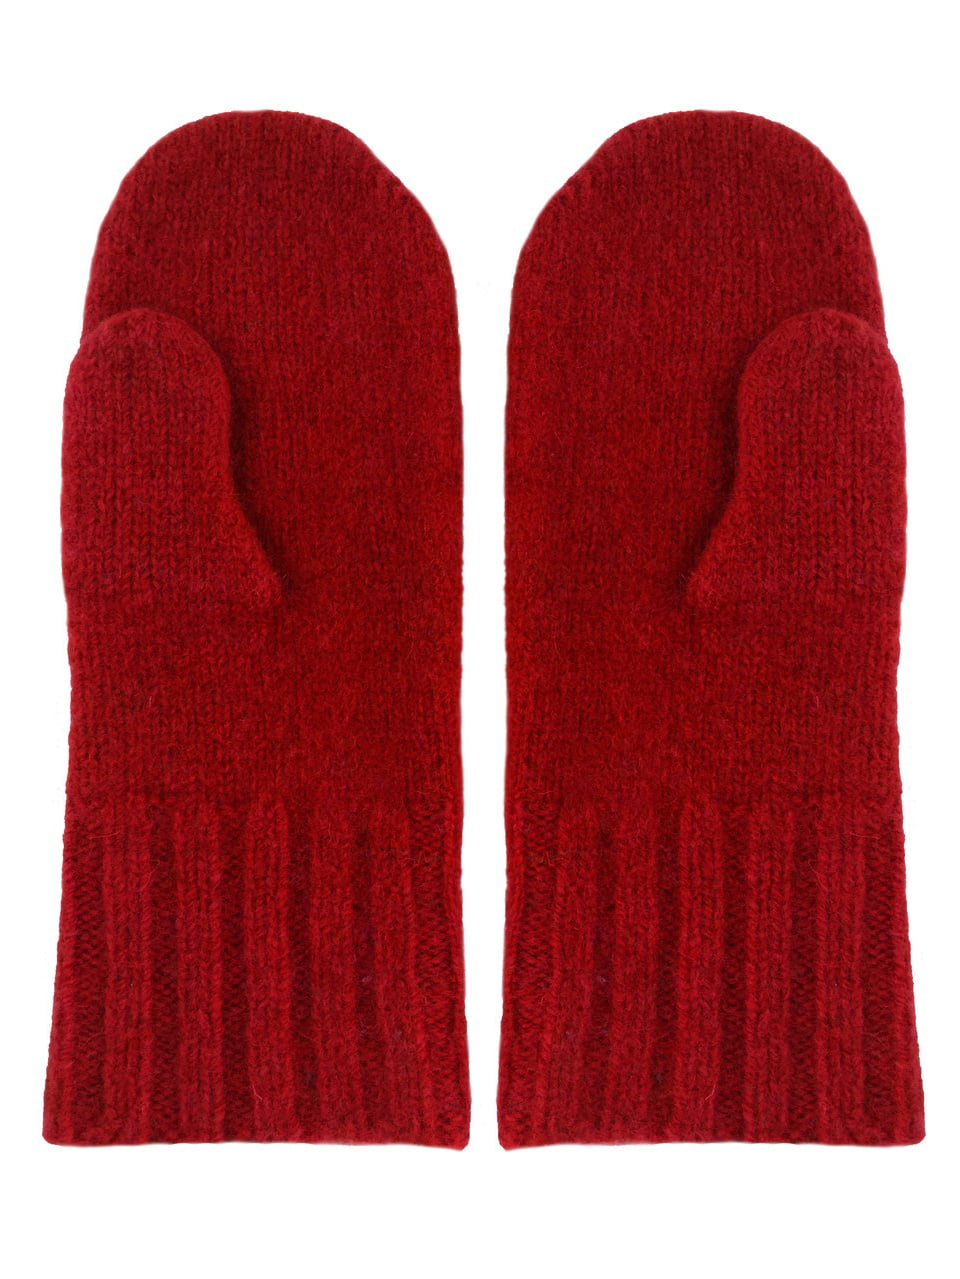 100% Boiled Wool Cuffed Black Gloves by Dachstein Woolwear from Austria 